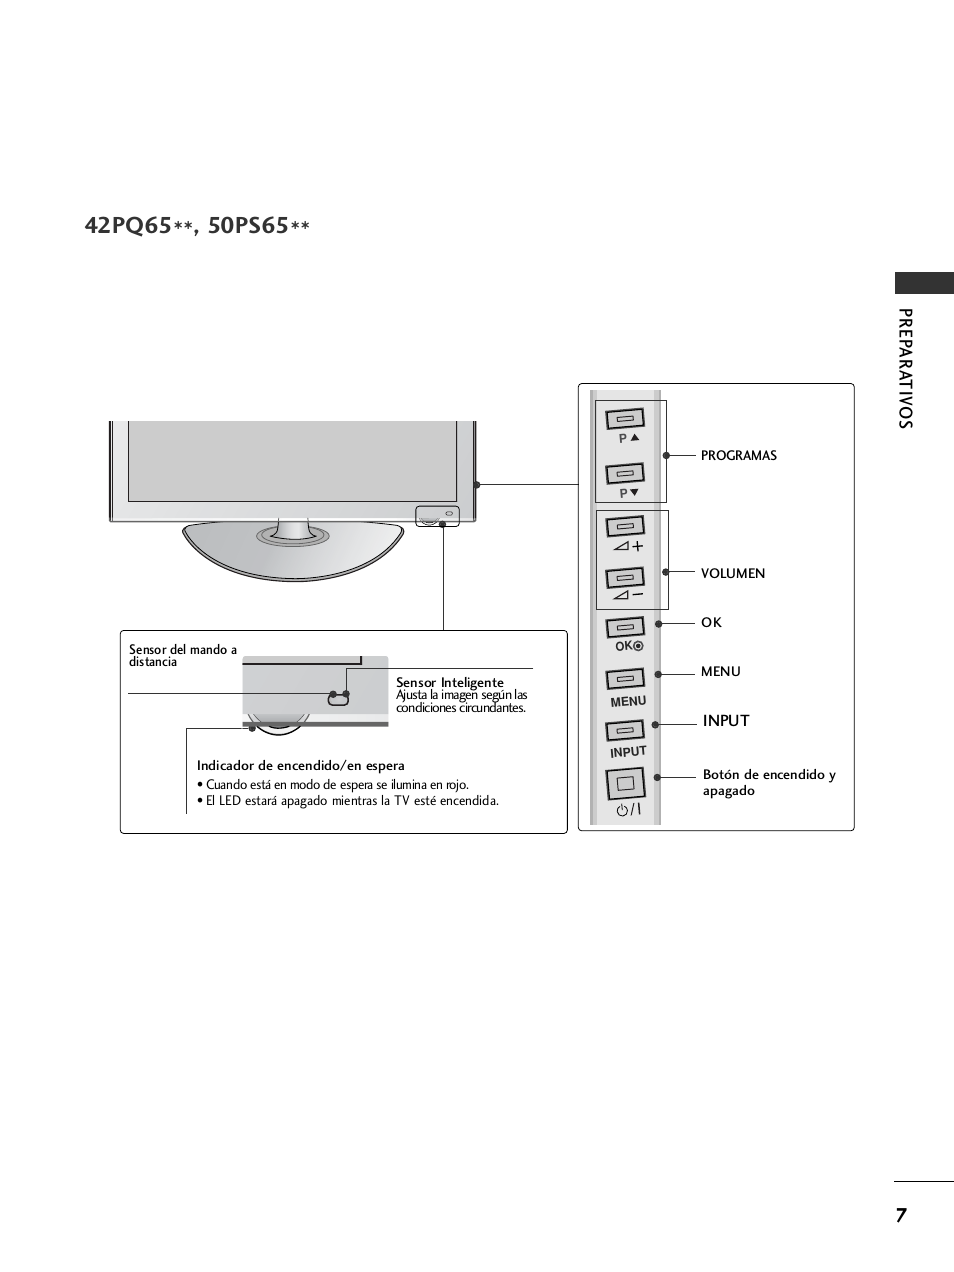 Prep ar a tiv os | LG 32LH40 Manual del usuario | Página 9 / 180